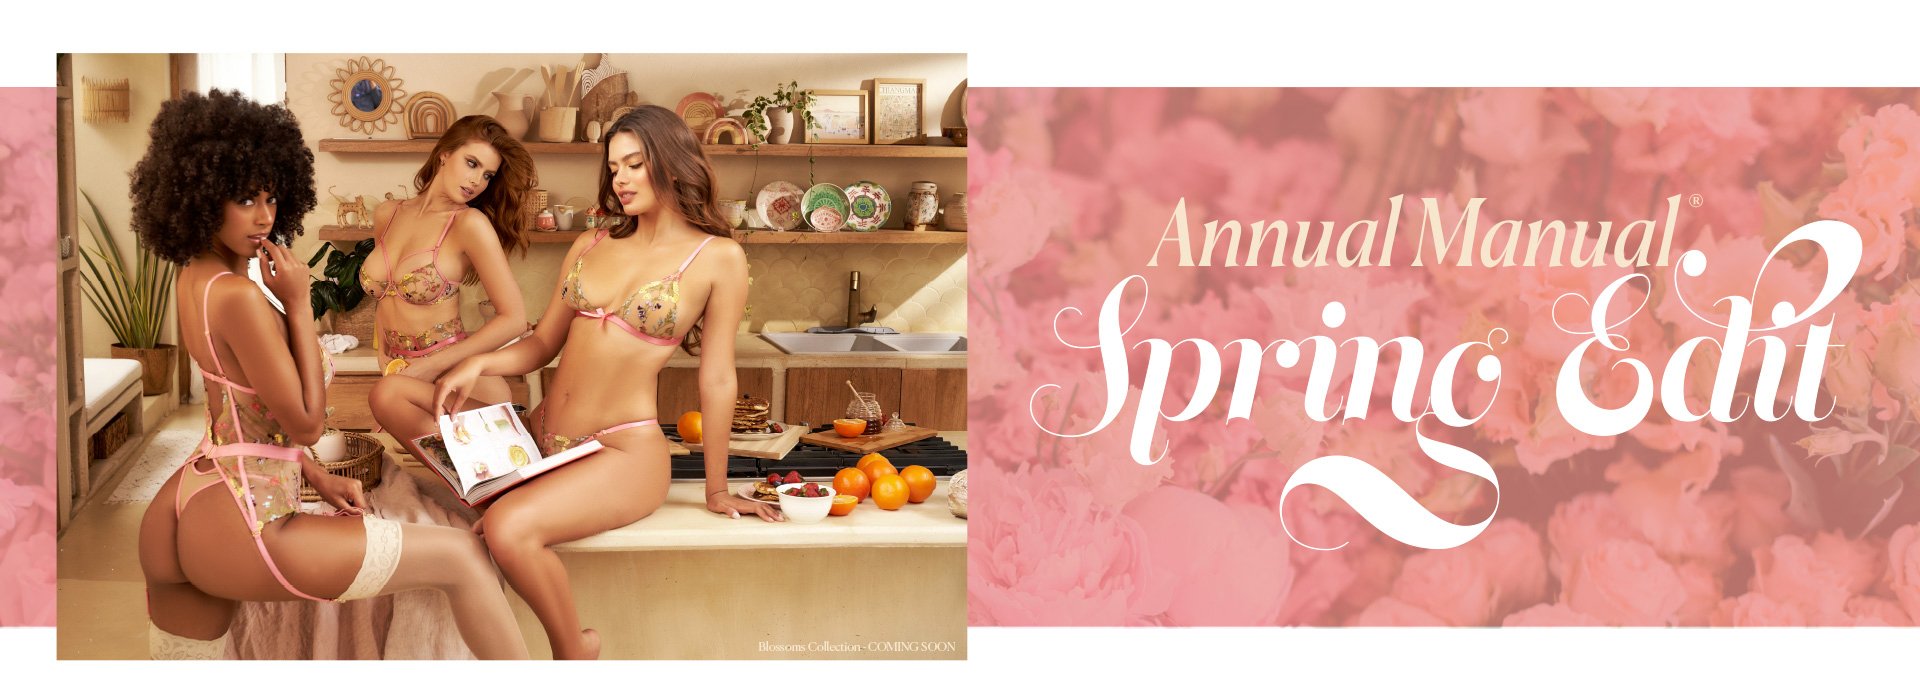 Annual Manual - Spring Edit